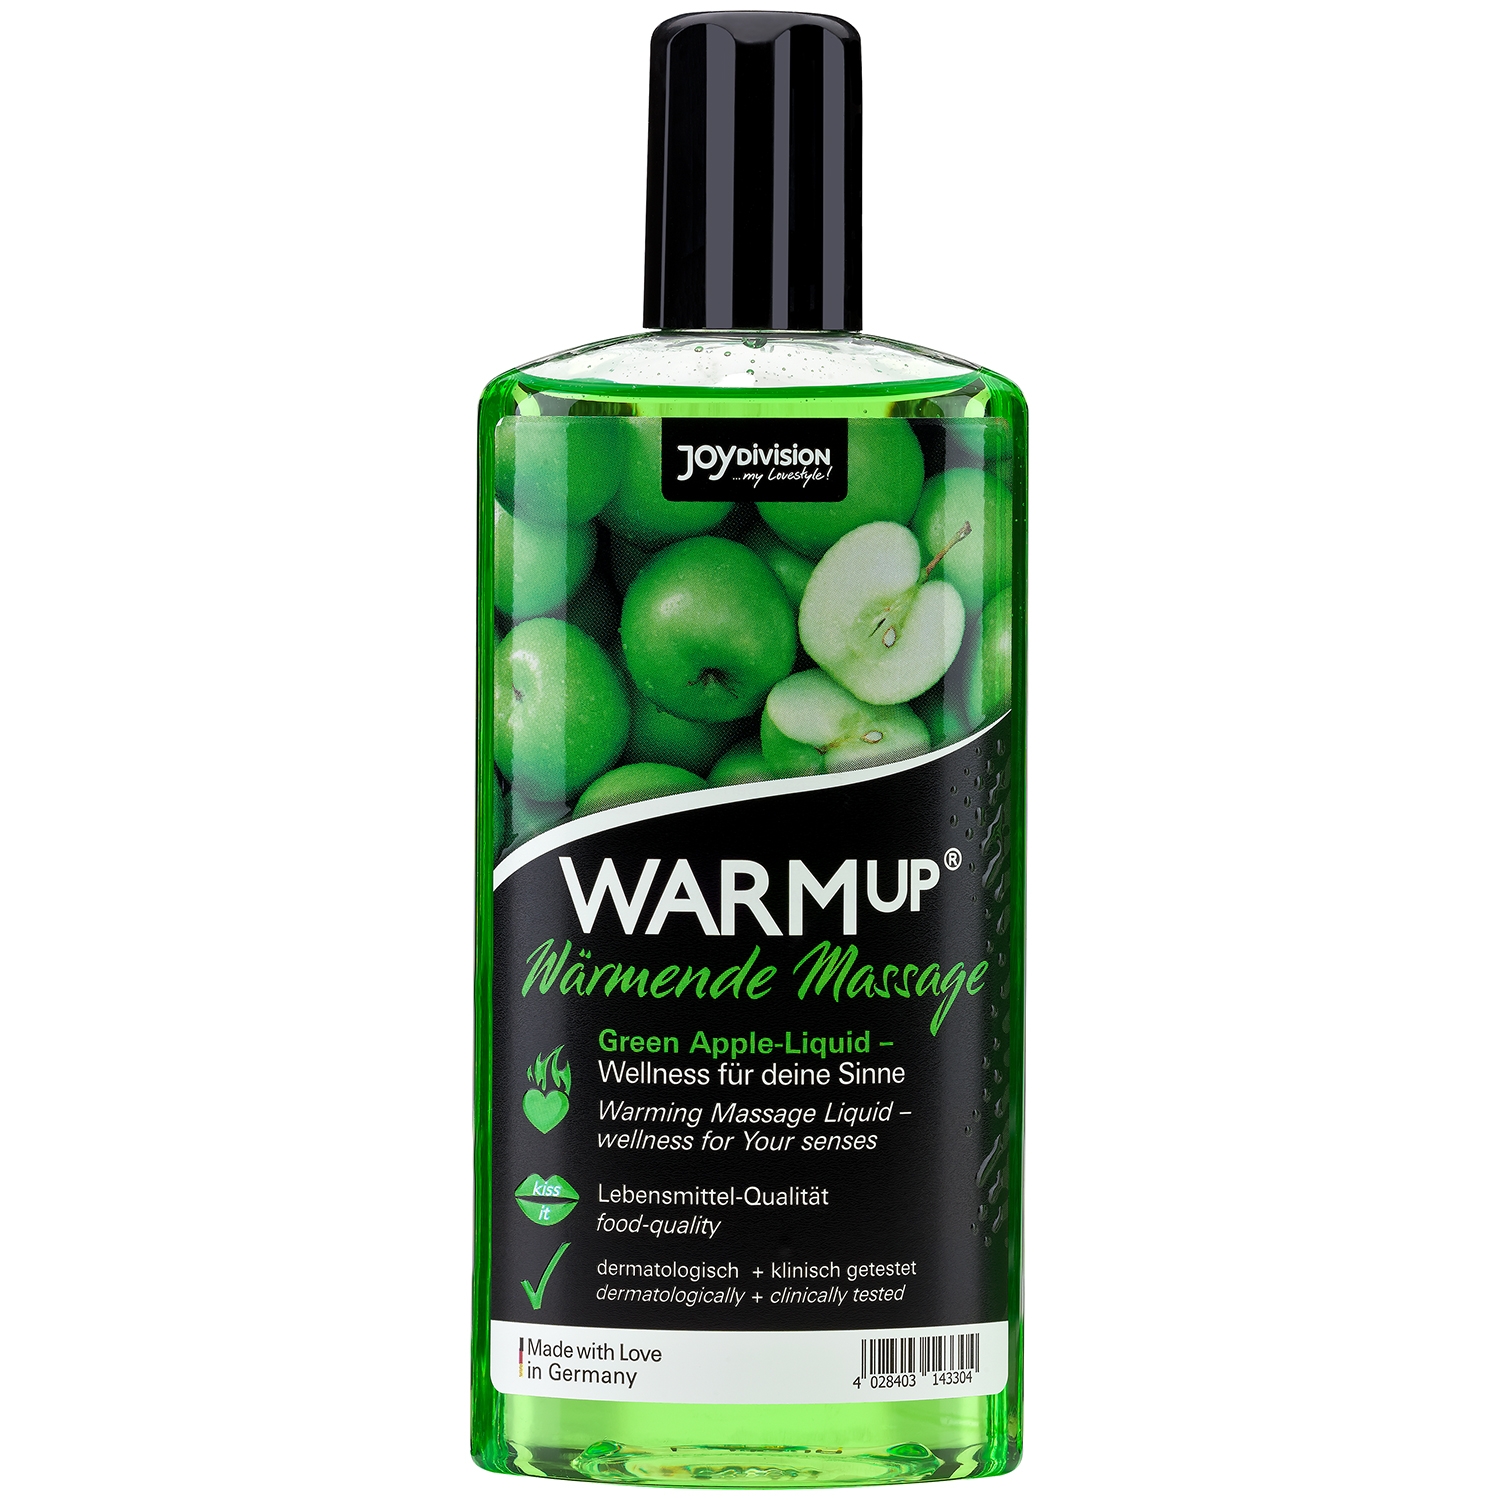 4: JoyDivision WARMup Varmende Massageolie med Smag 150 ml   - Green